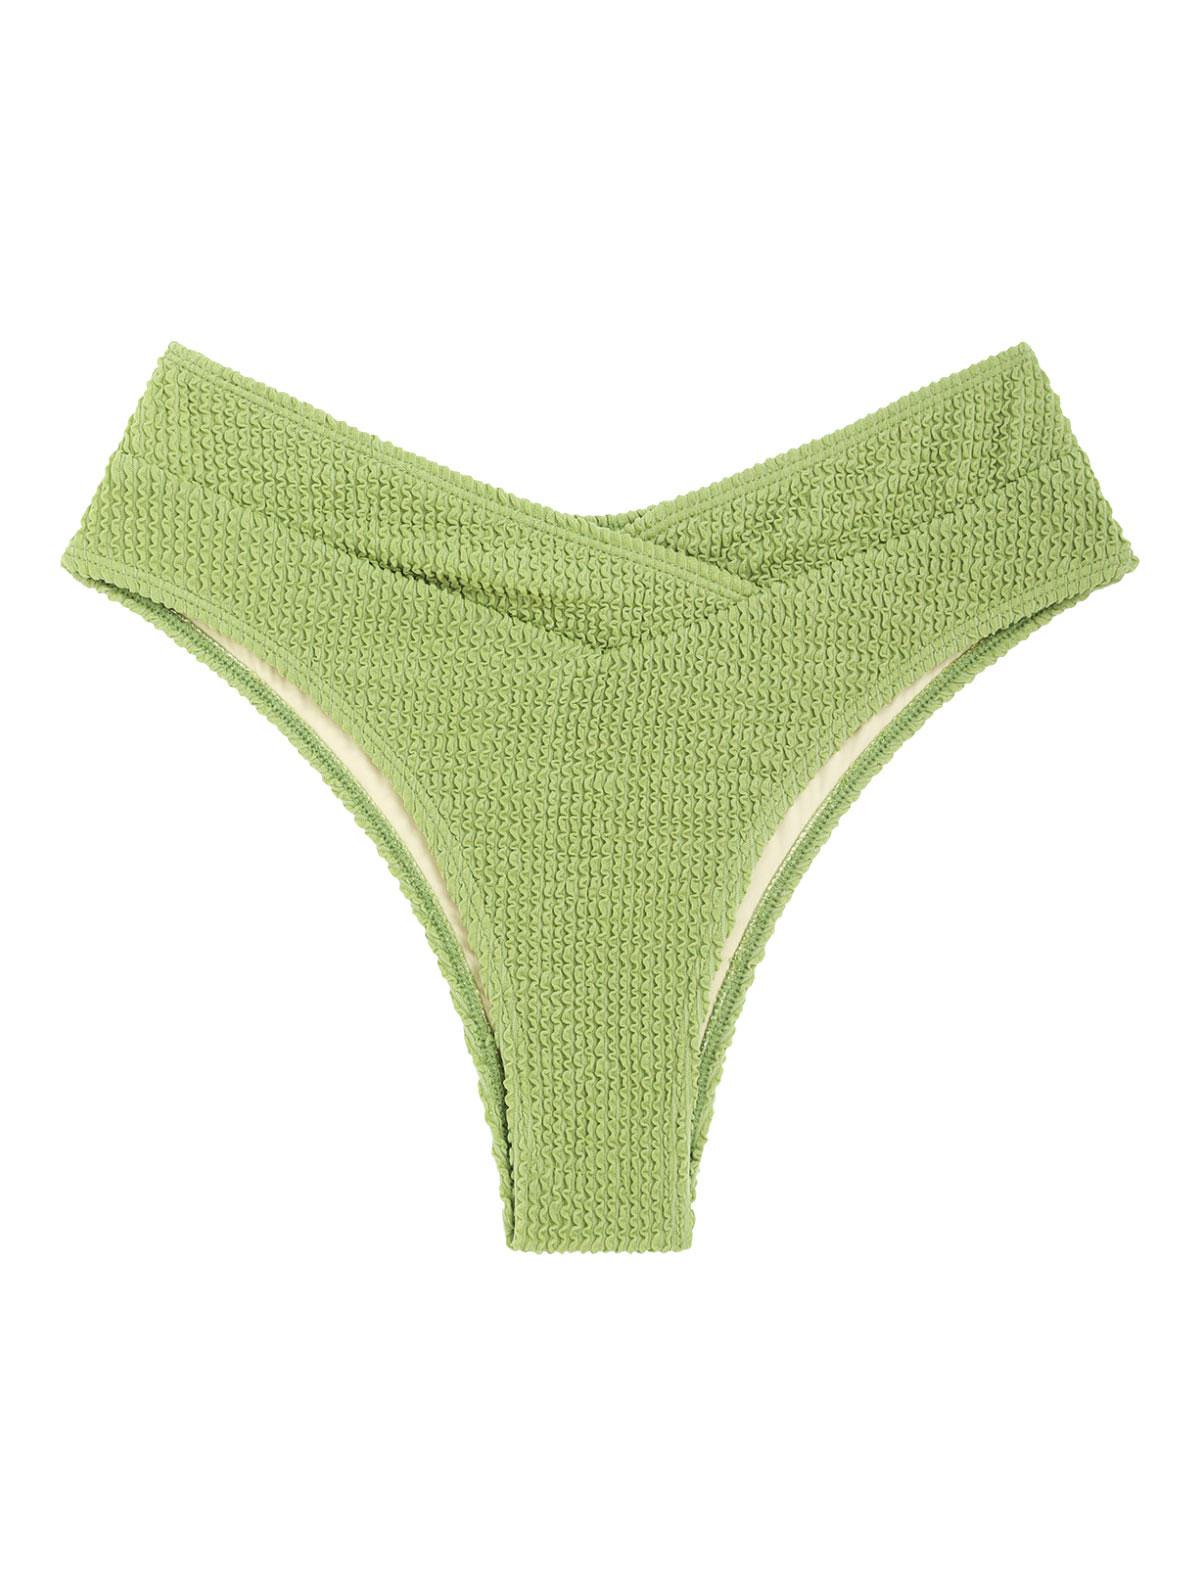 ZAFUL High Waisted Crossover Crinkle Textured Bikini Bottom M Green